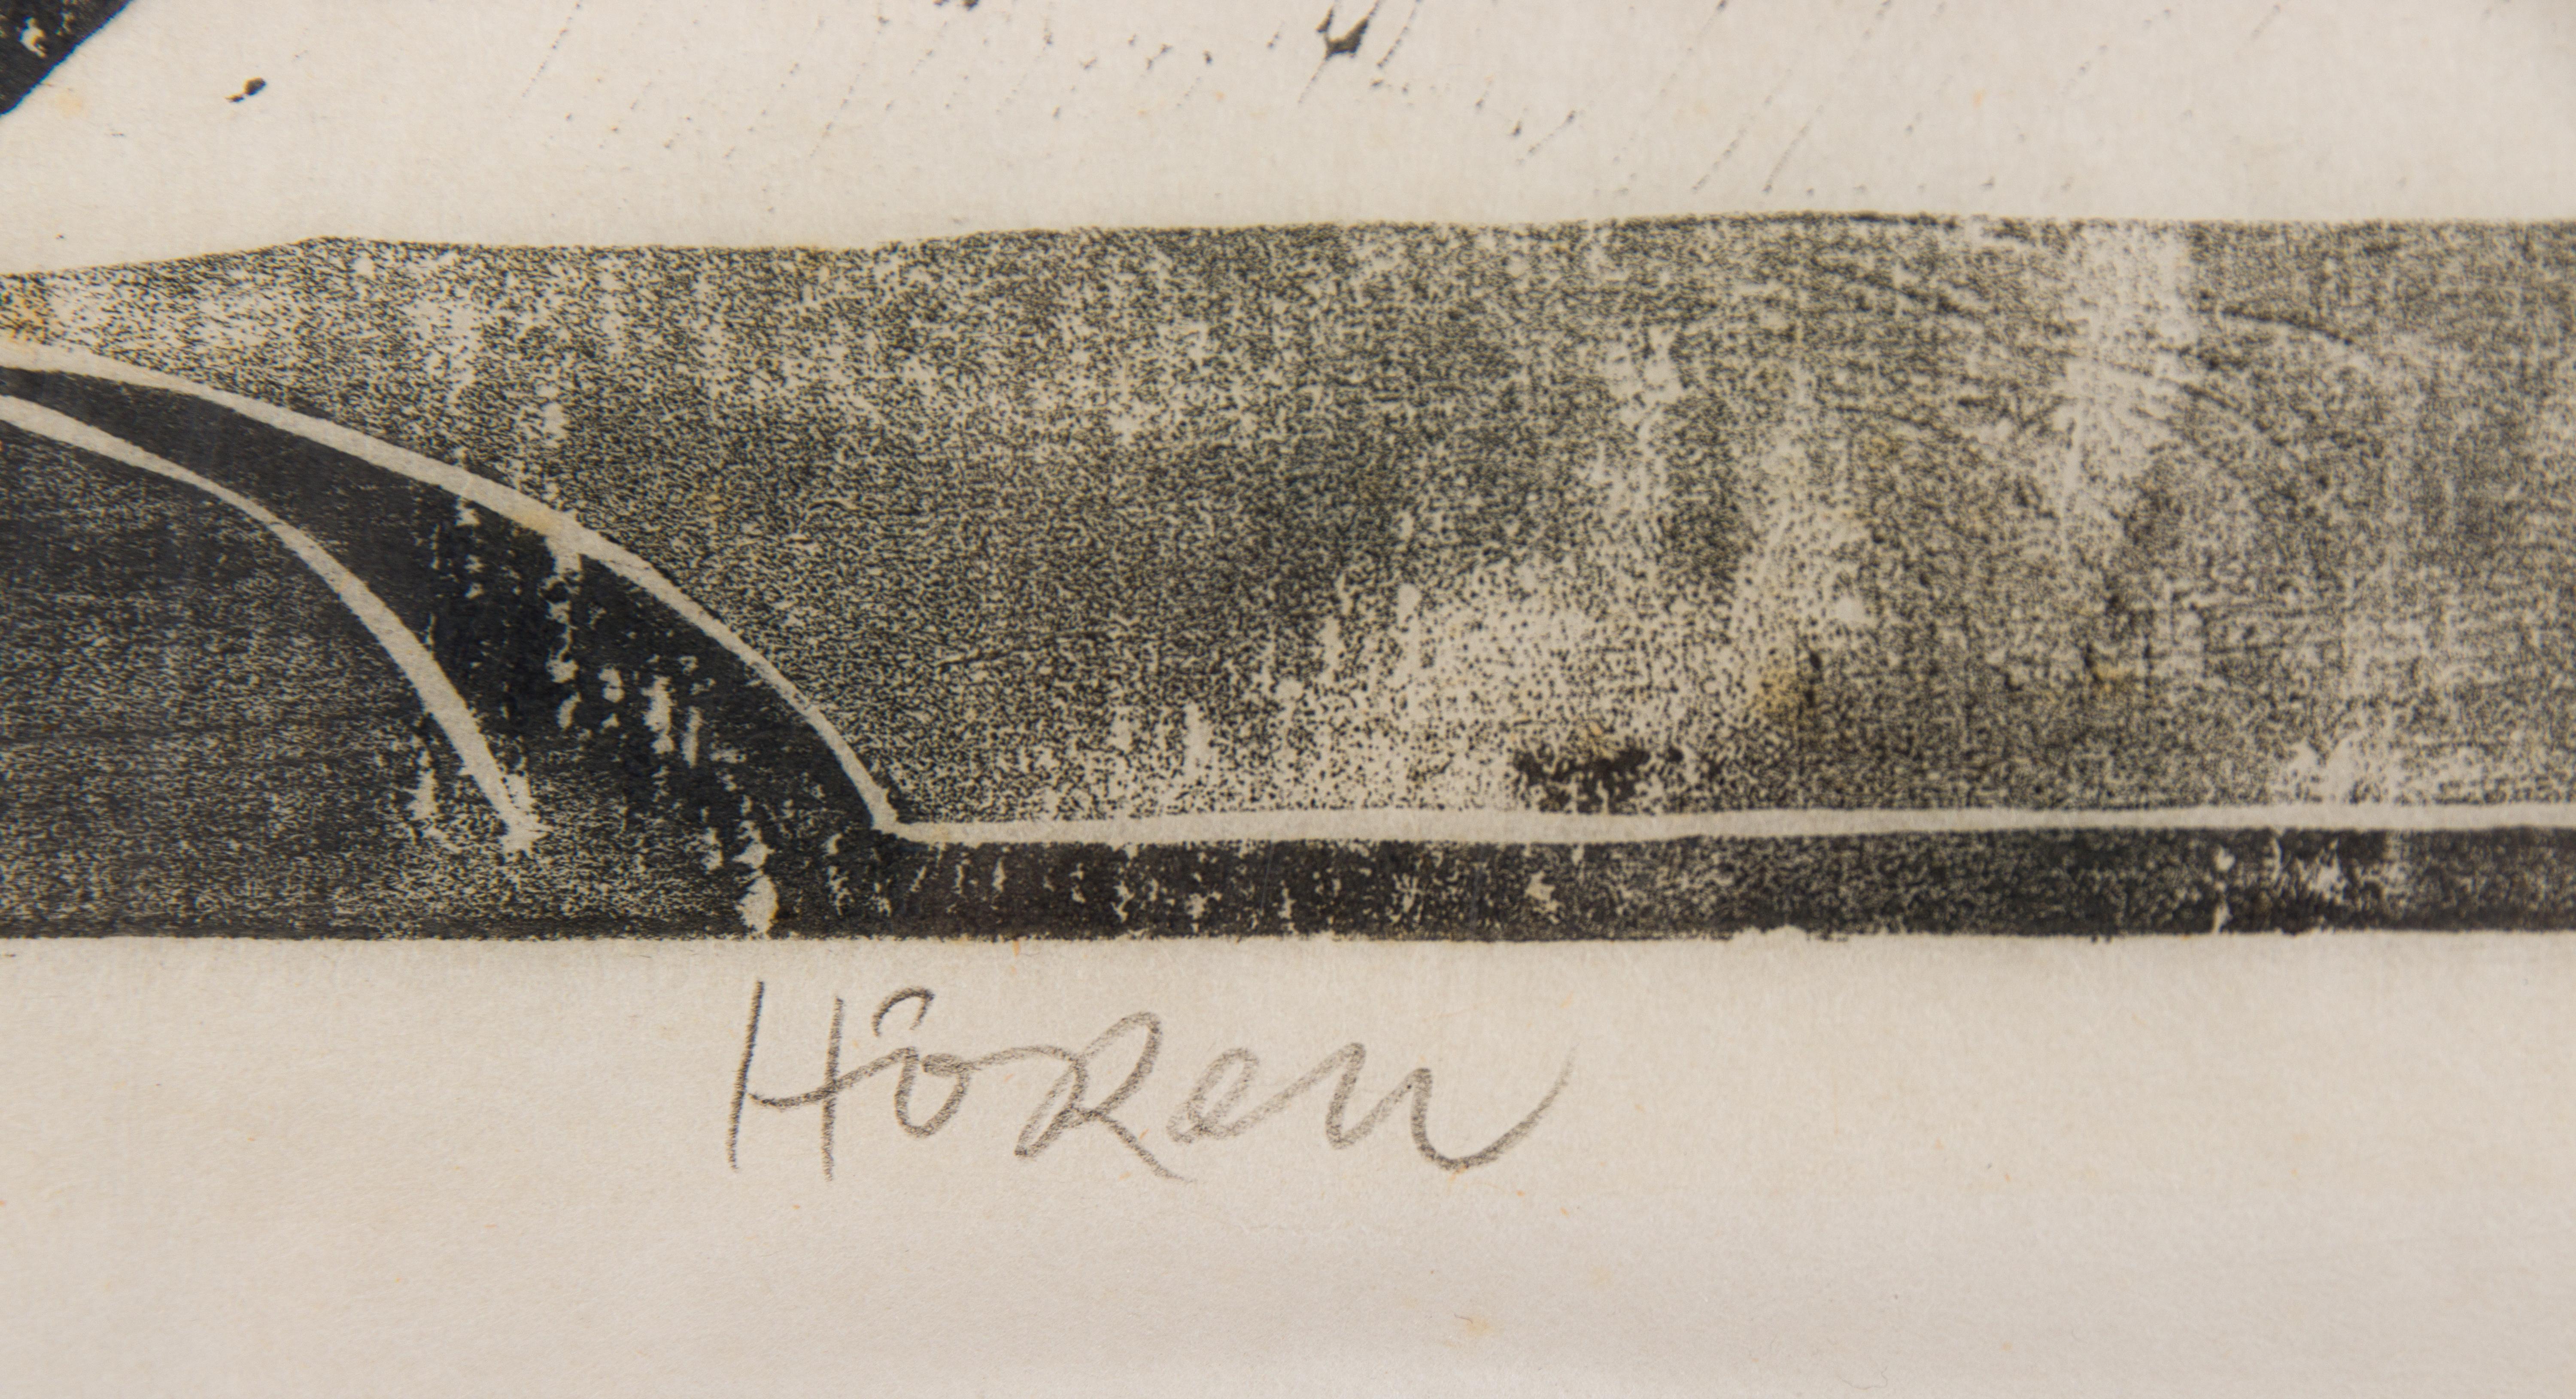 Hören / Listening - Print by Auguste Kronheim